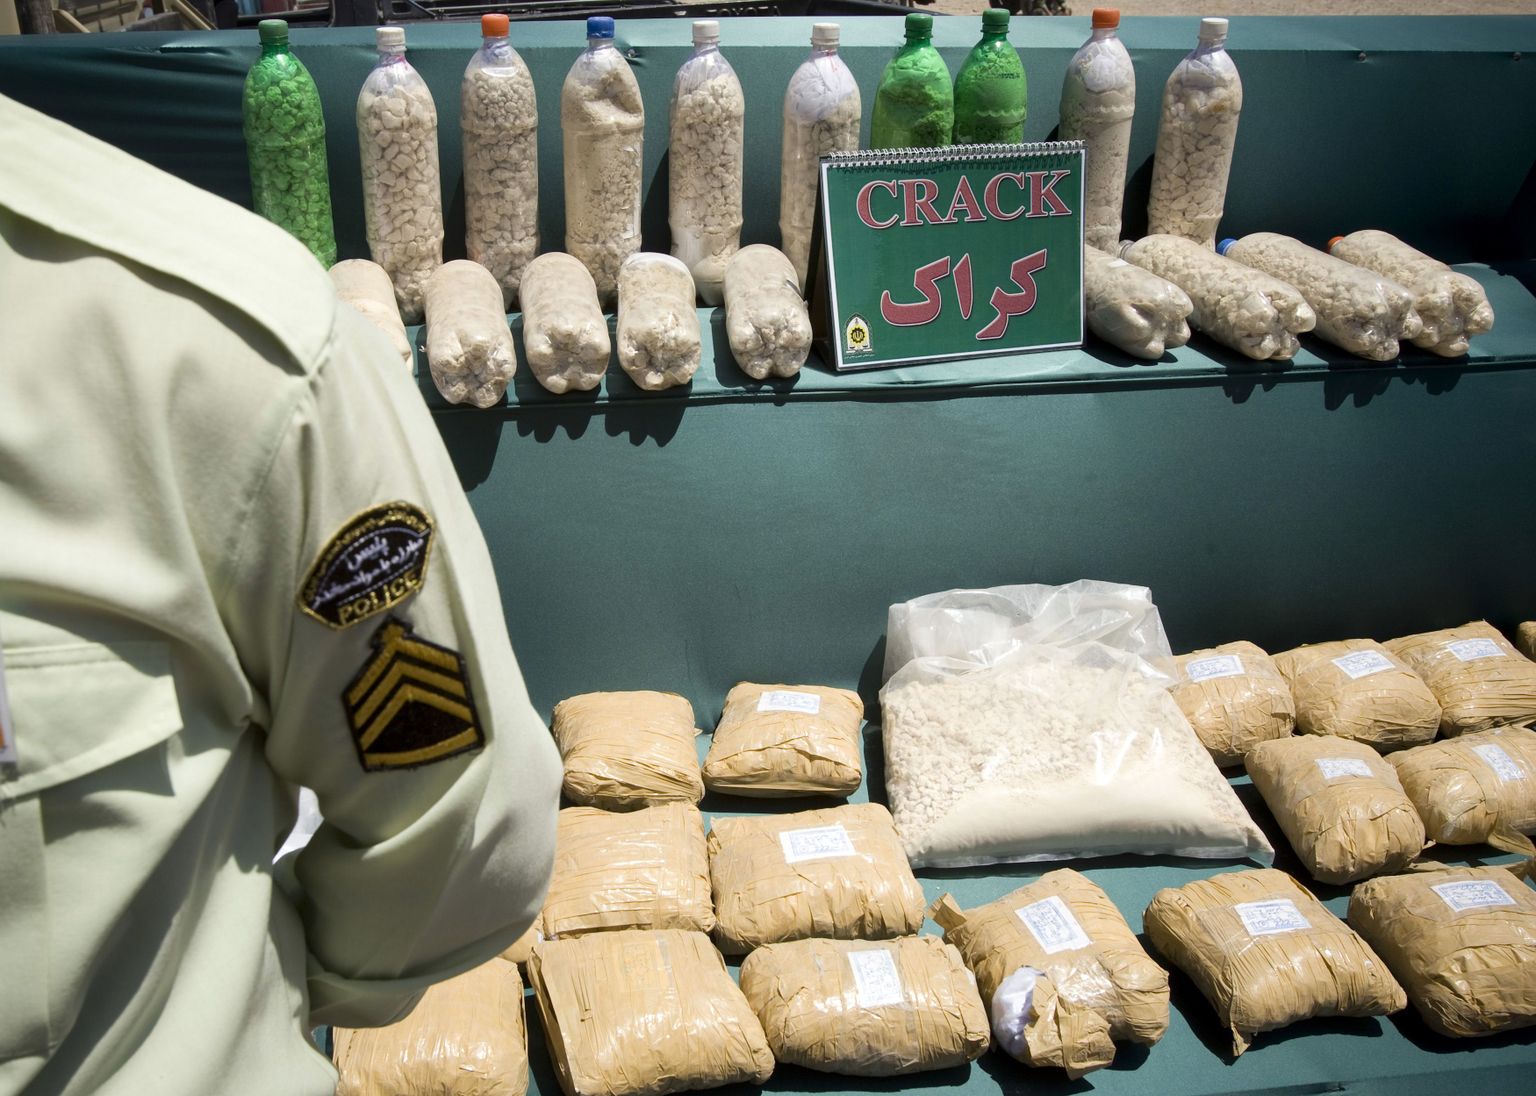 Iraani politseinik valvamas konfiskeeritud narkootikume.